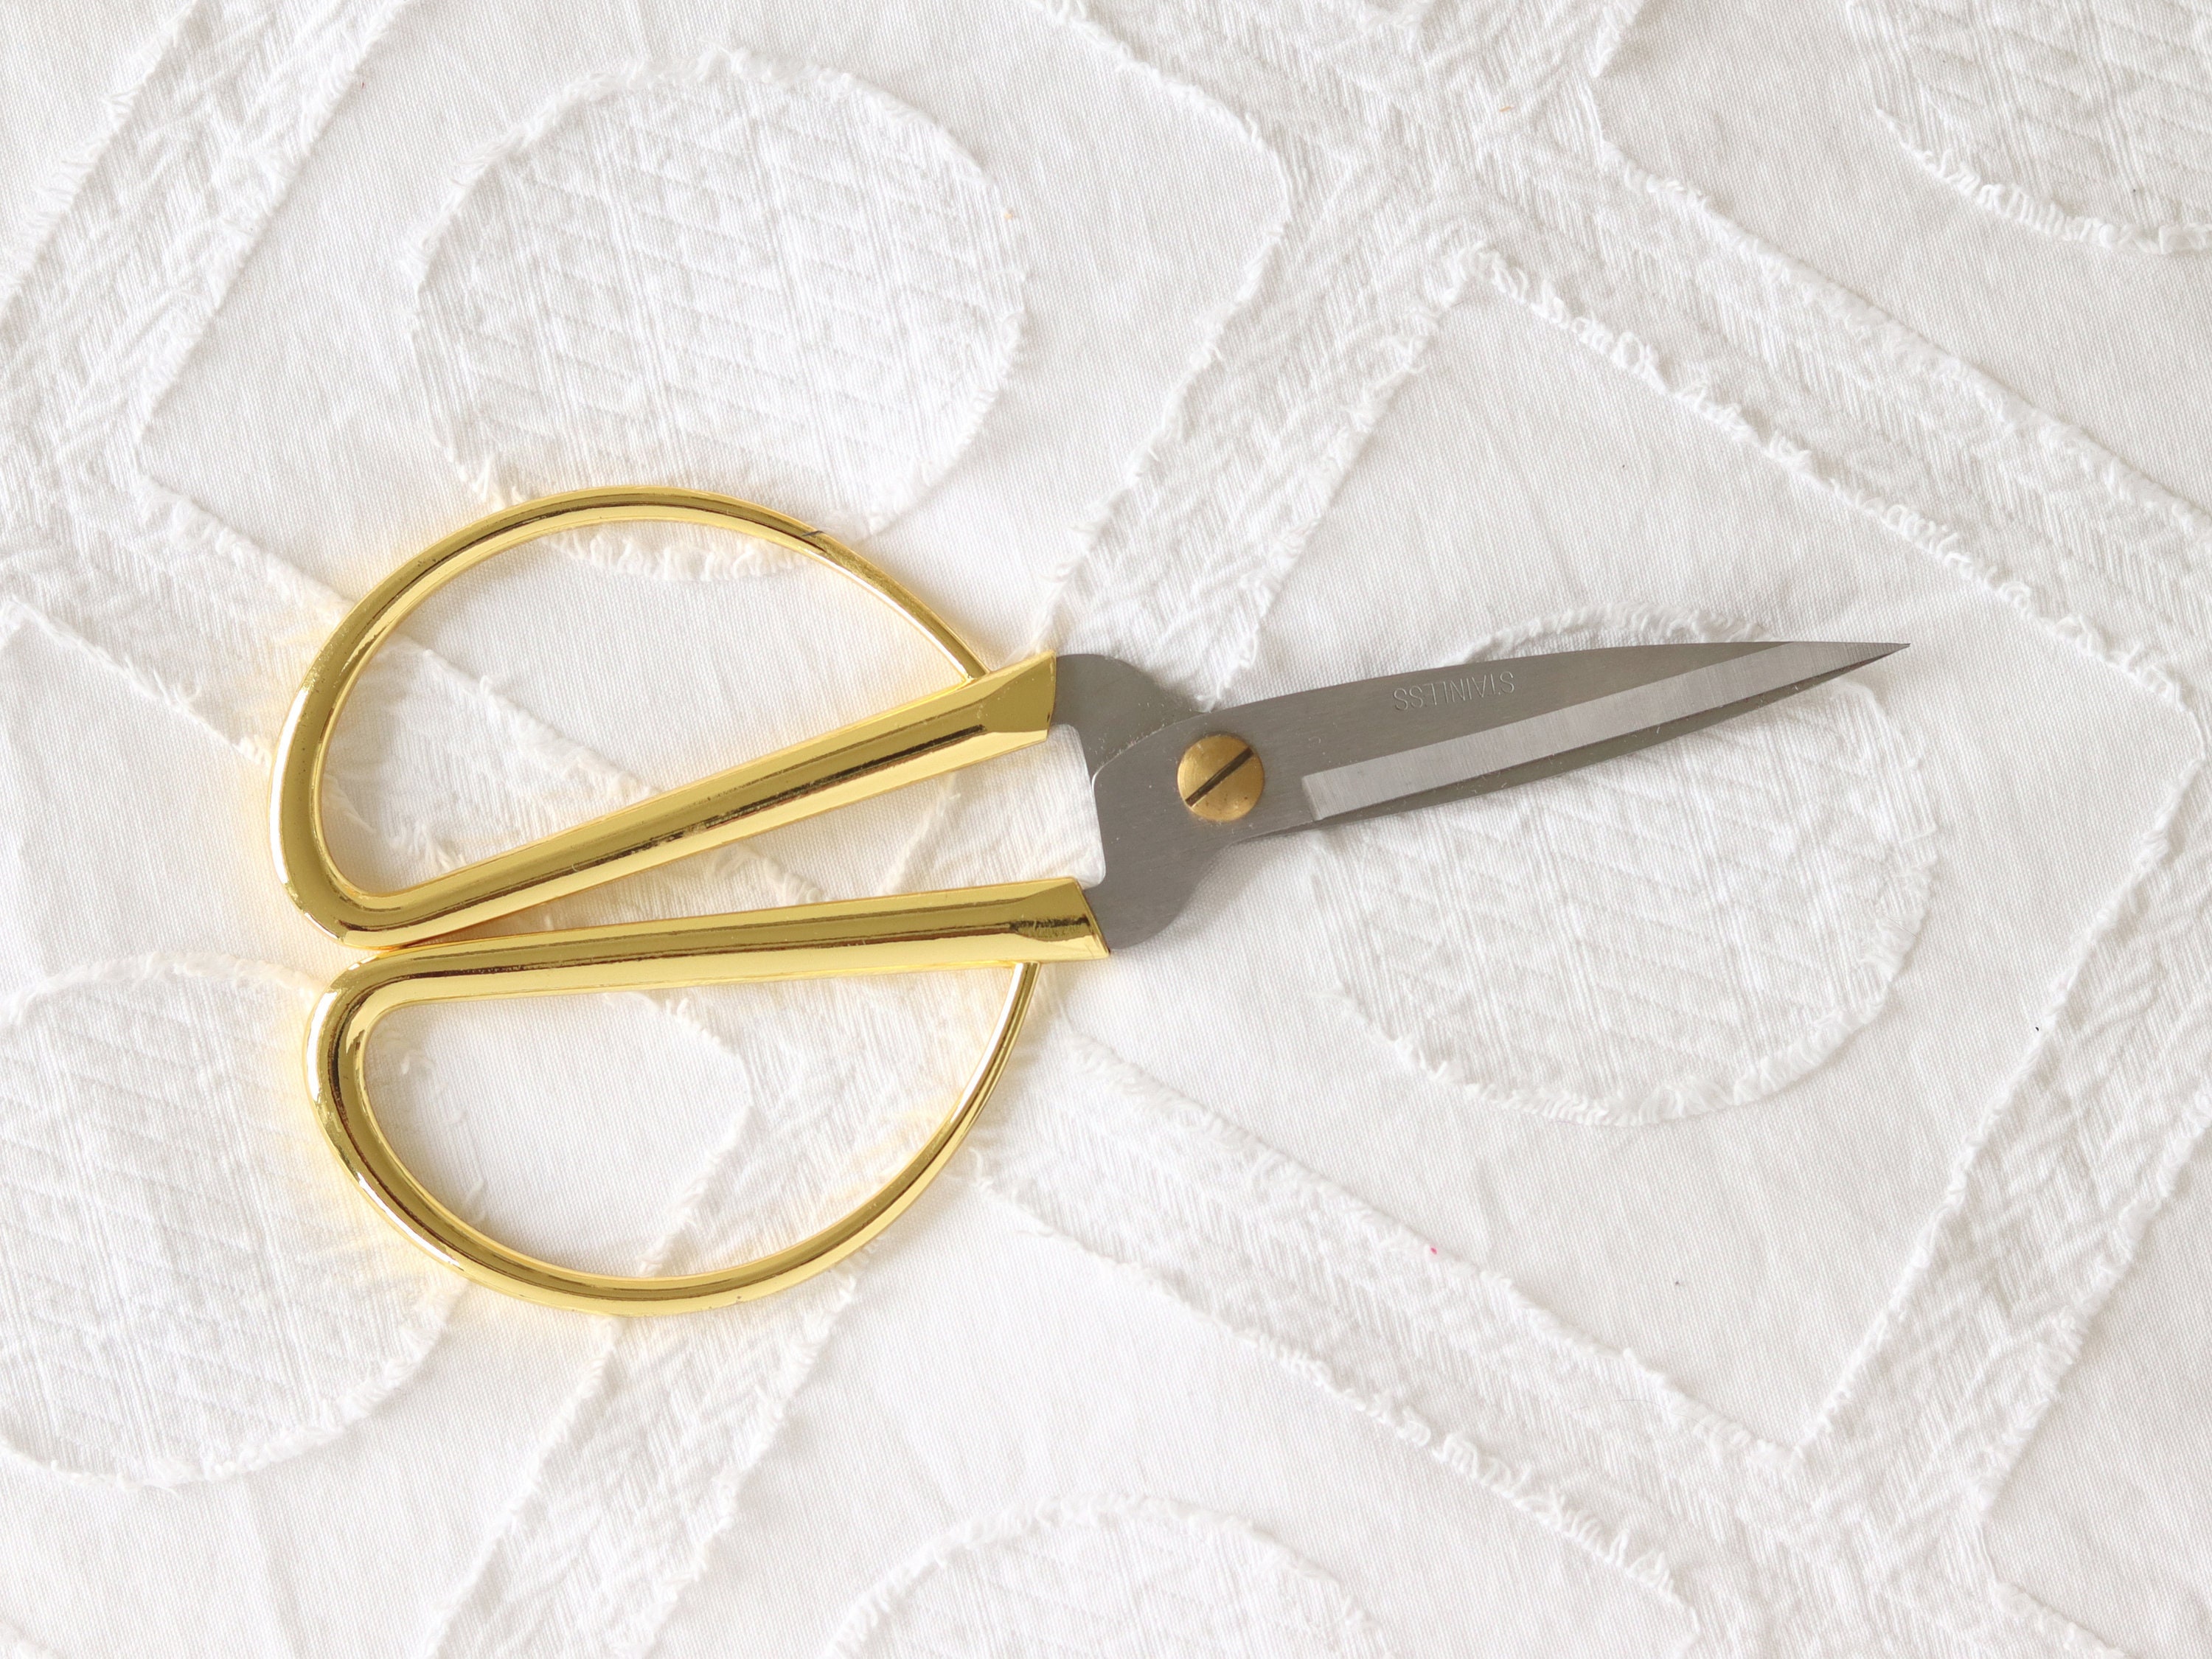 Duckbill Scissors for Trimming the Pile and Edges of Handmade Rugs, 7